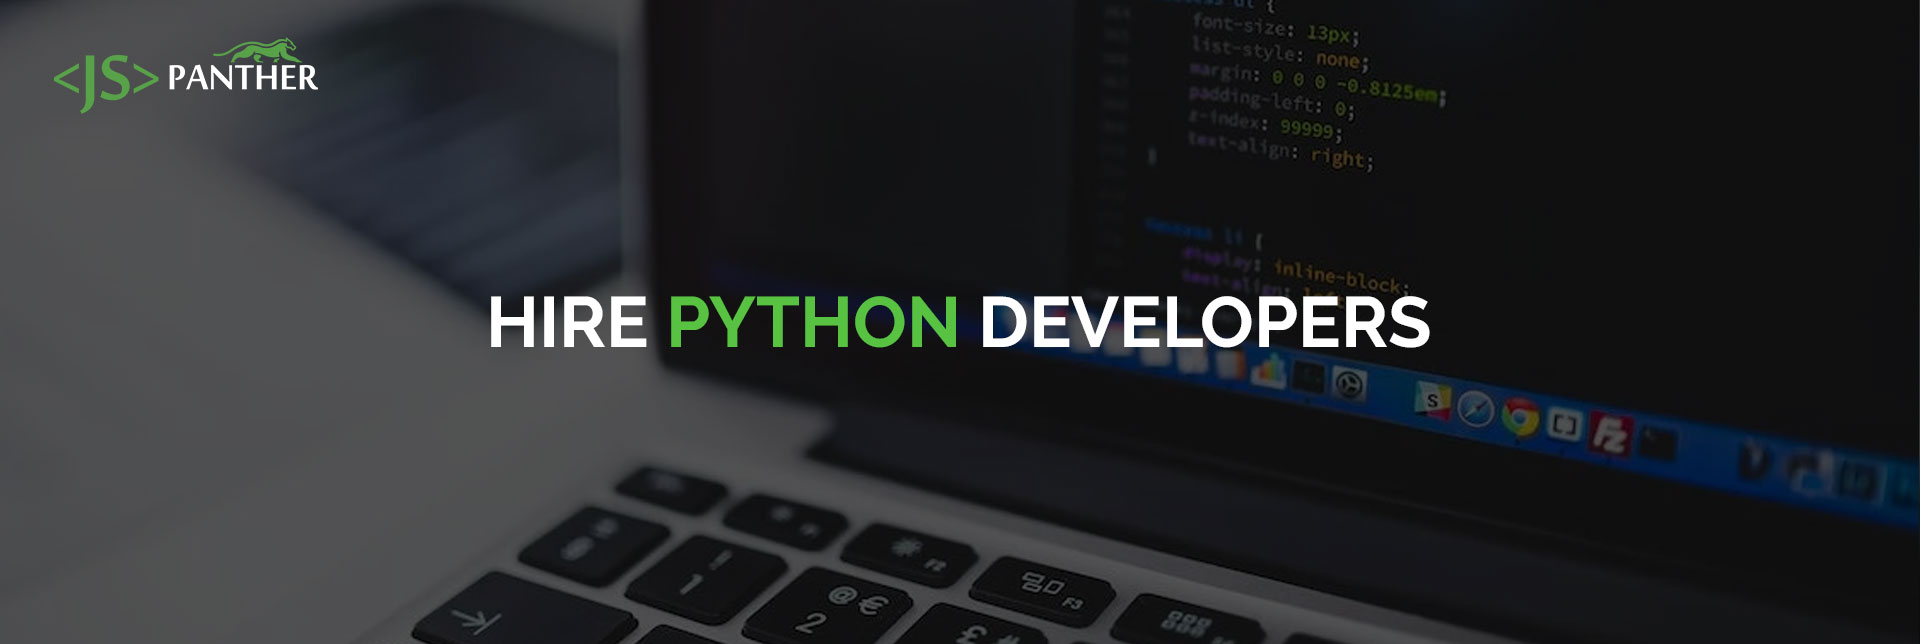 Hire Python Developers | Best Python Development Company